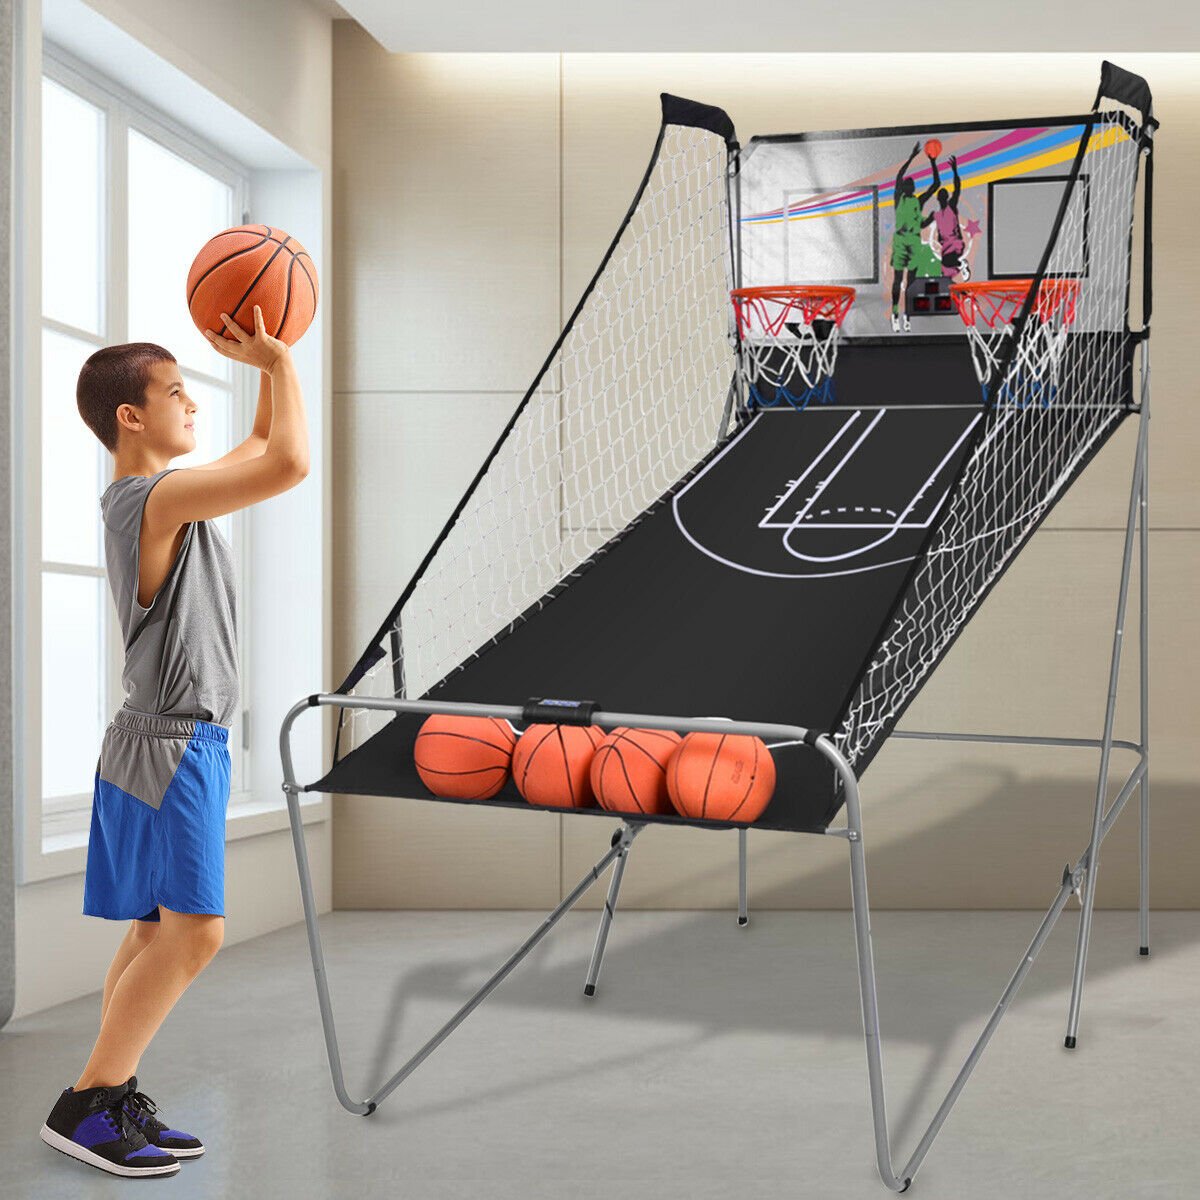 8-in-1 Electronic Basketball Hoop Arcade: Indoor Gaming Entertainment